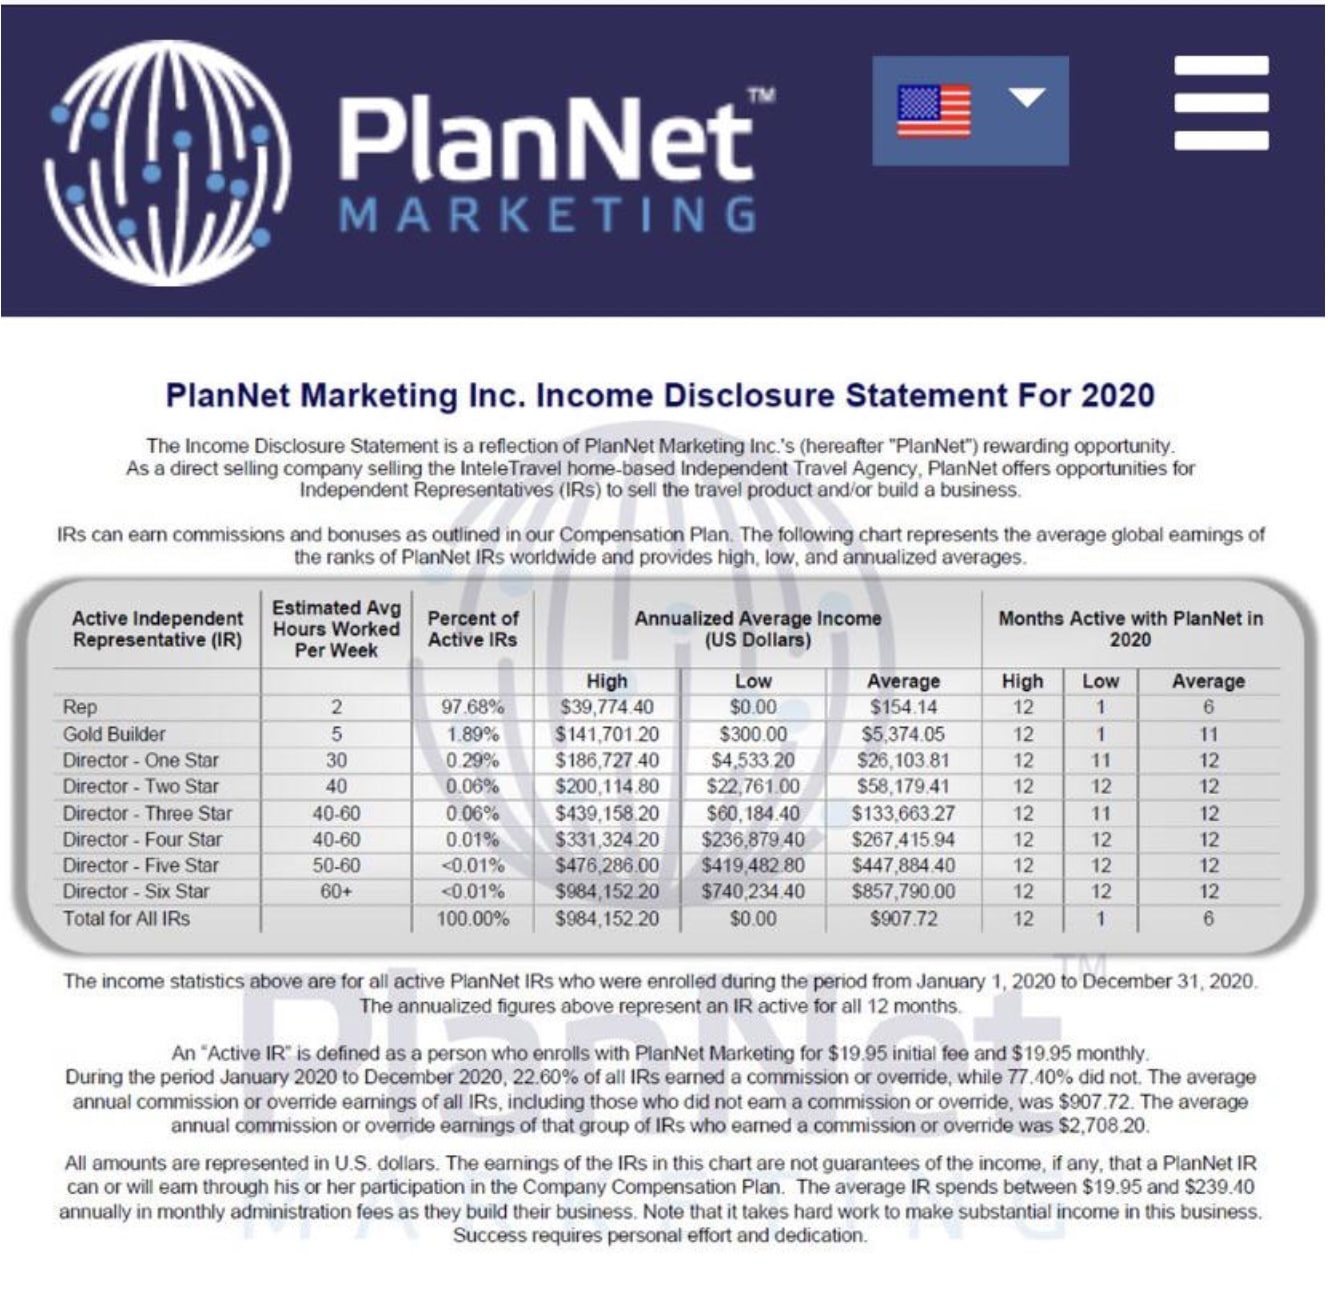 nteletravel/PlanNet Marketing 2020 Income Disclosure Statement